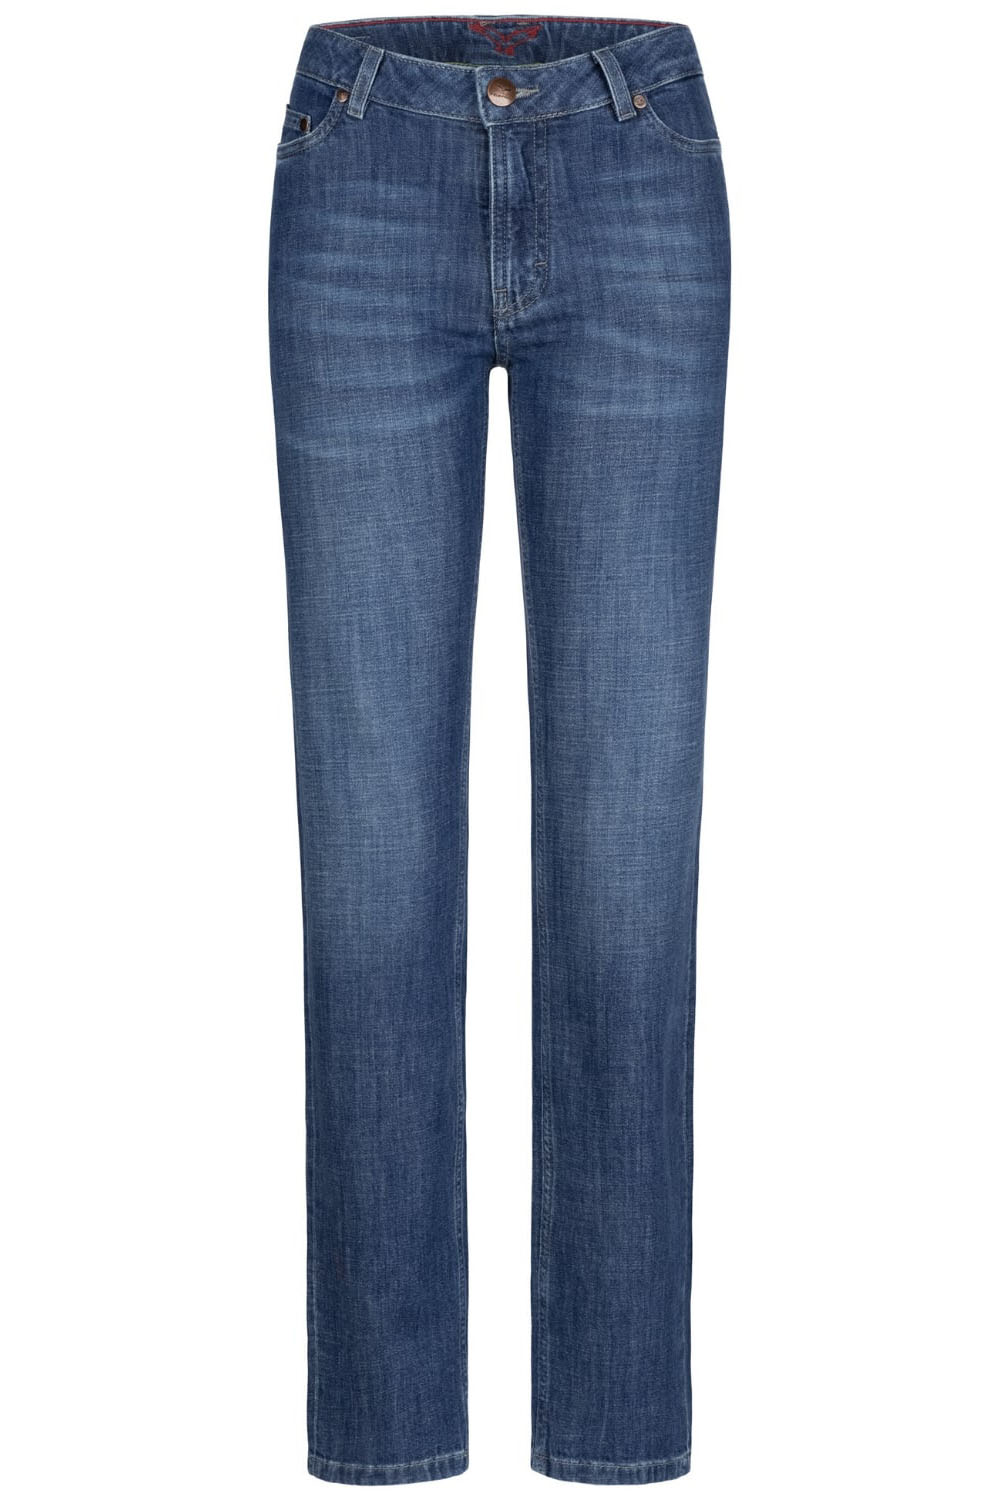 Jeans Finna StraightCut medium blue